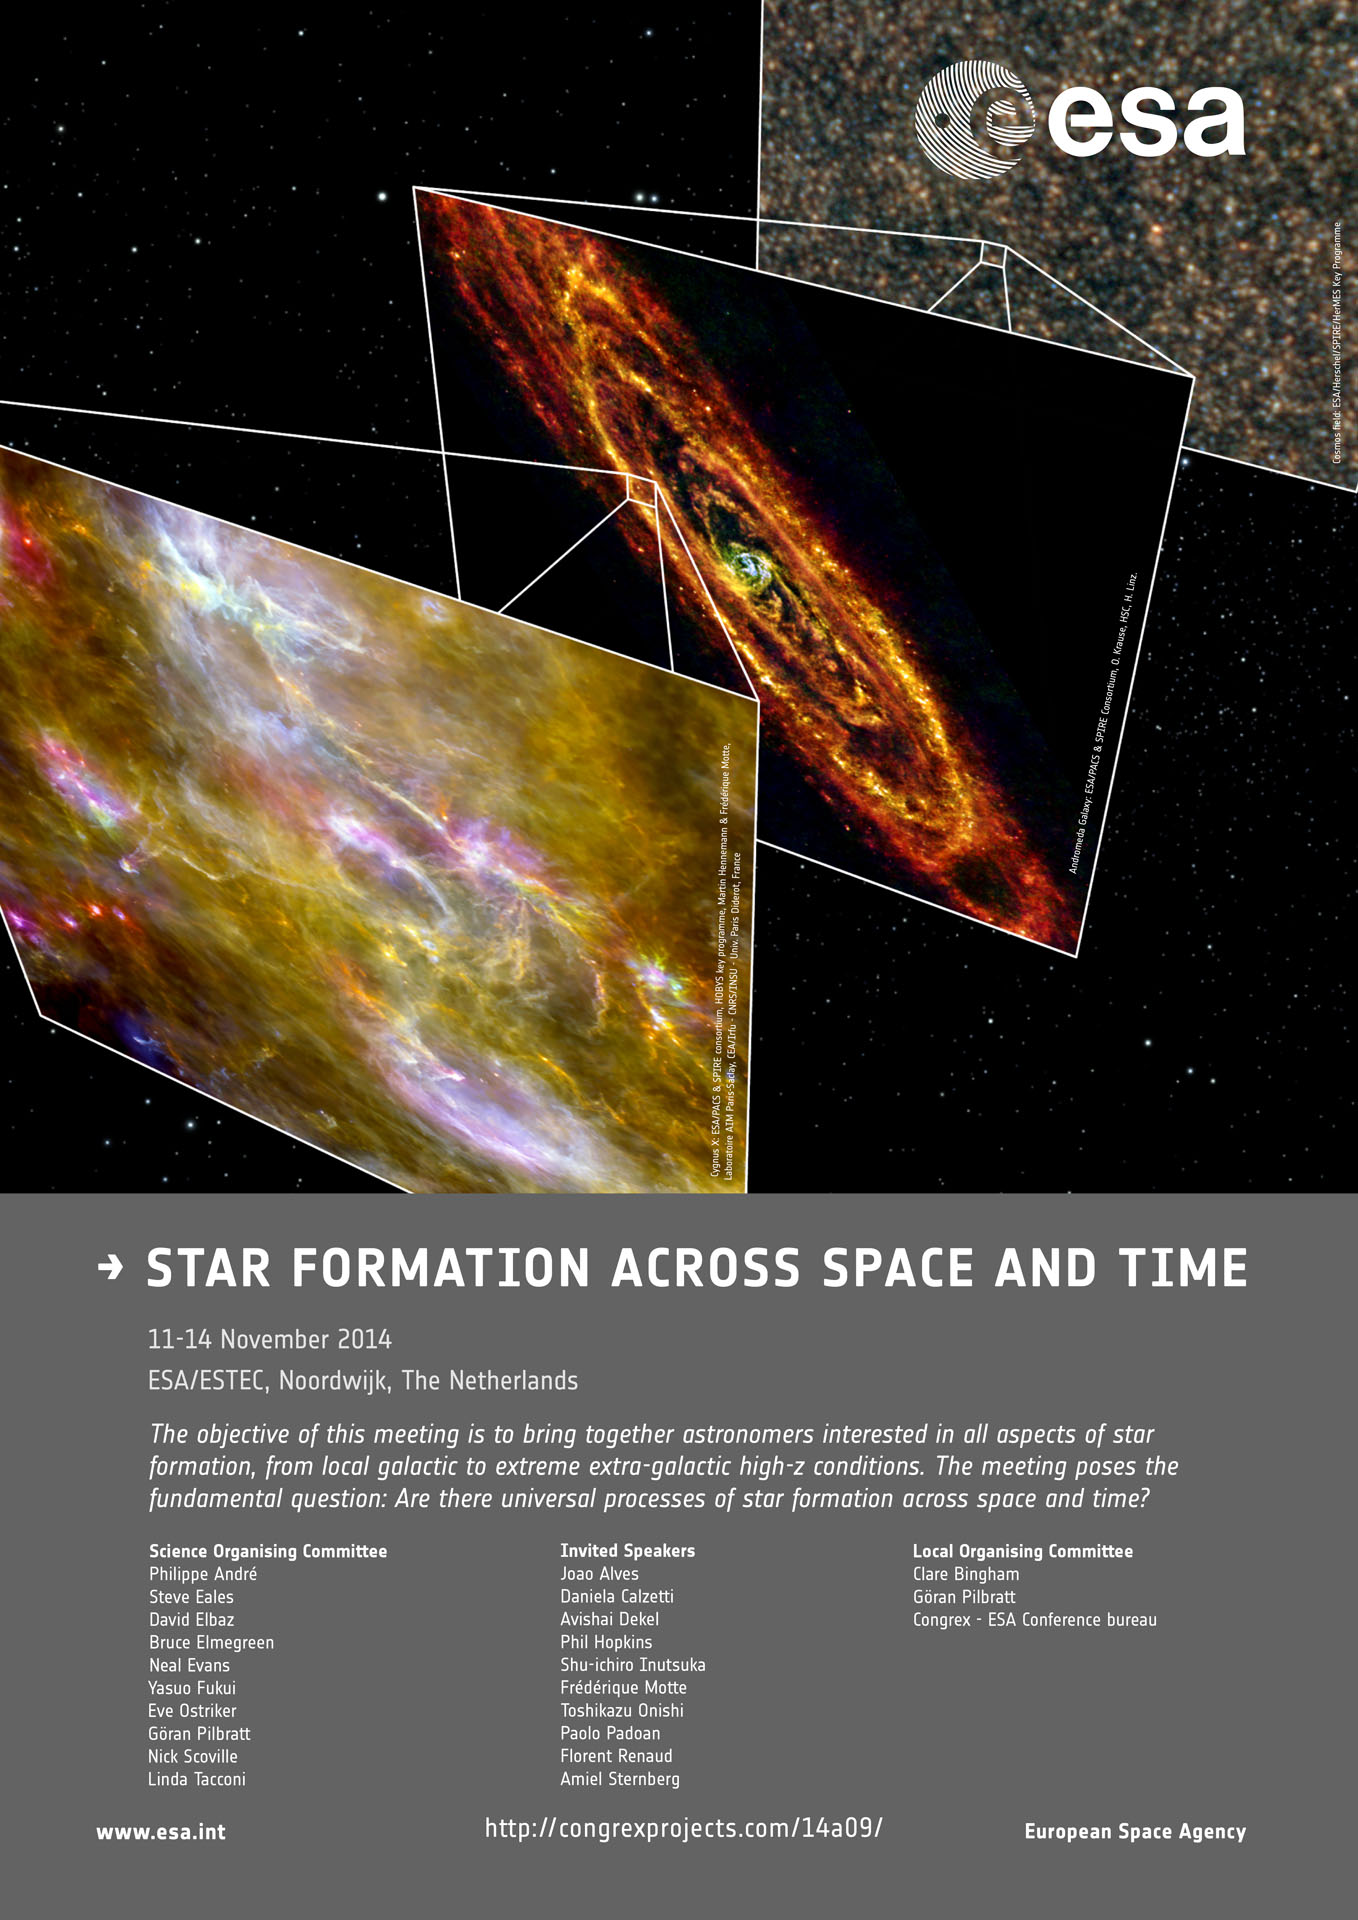 Star Formation Across Space and Time, ESA/ESTEC, Noordwijk, The Netherlands, 11-14 November 2014